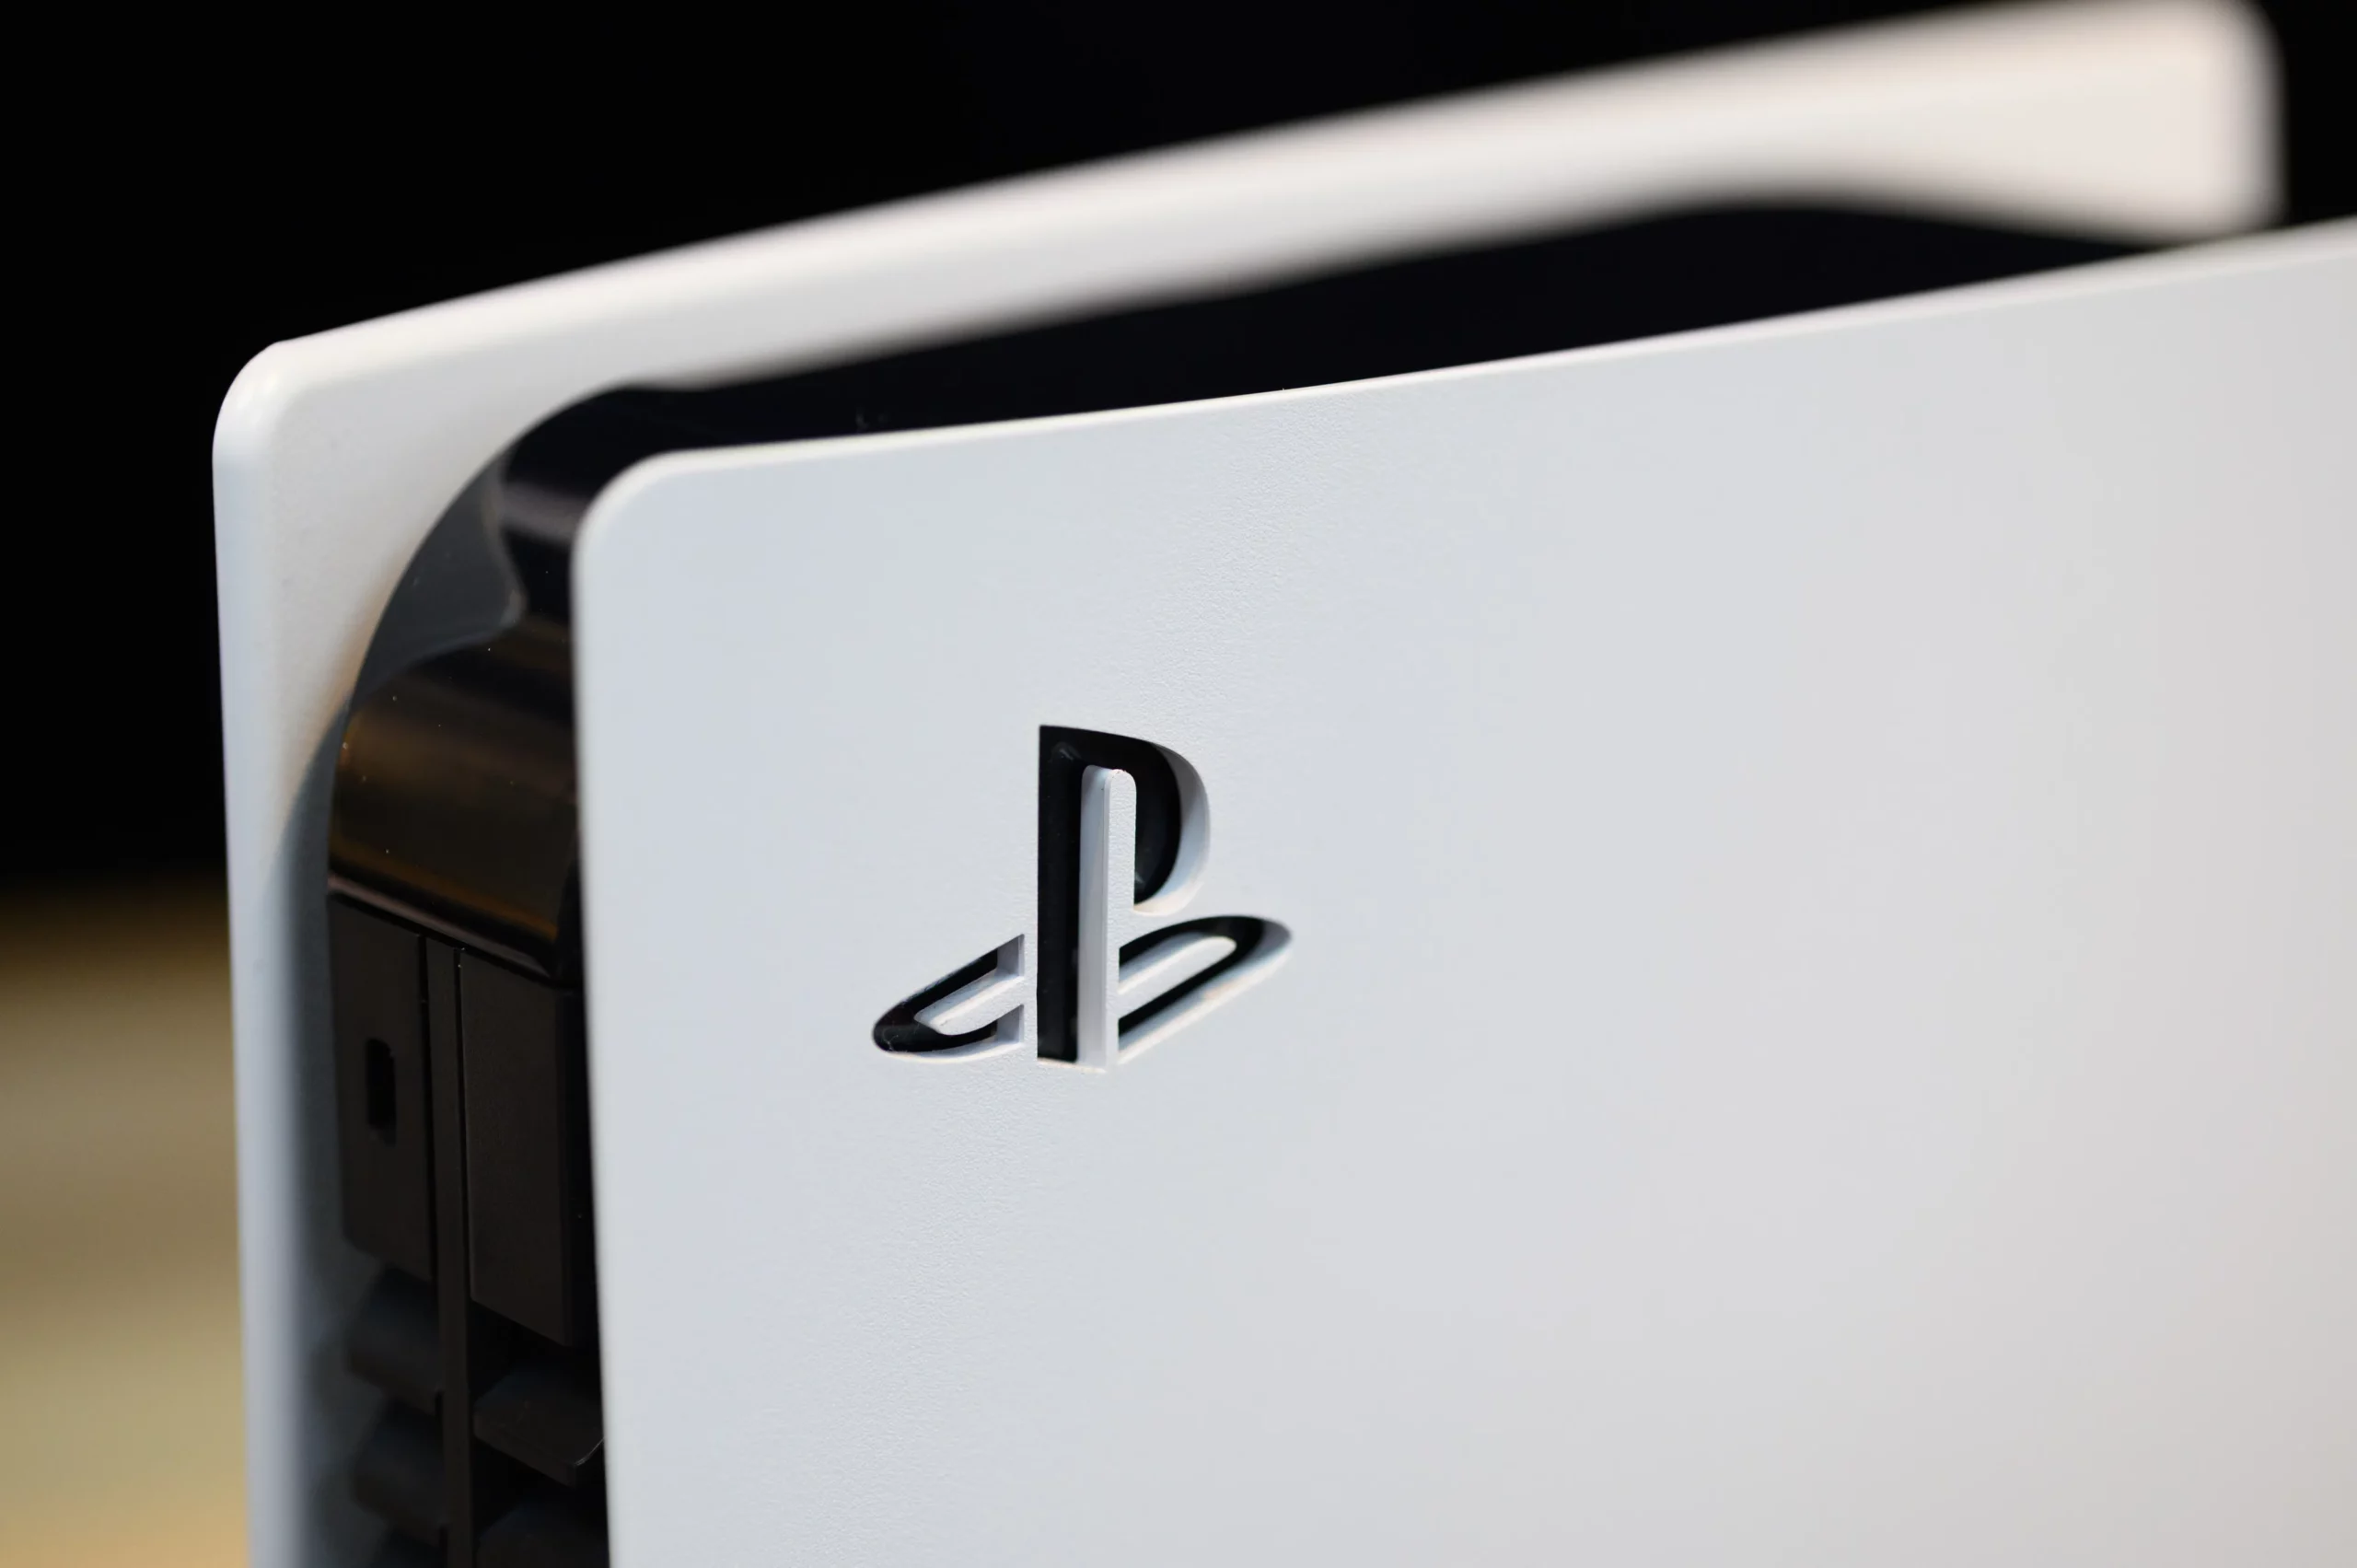 Massive Layoffs at PlayStation: 900 Jobs Cut Across Key Studios